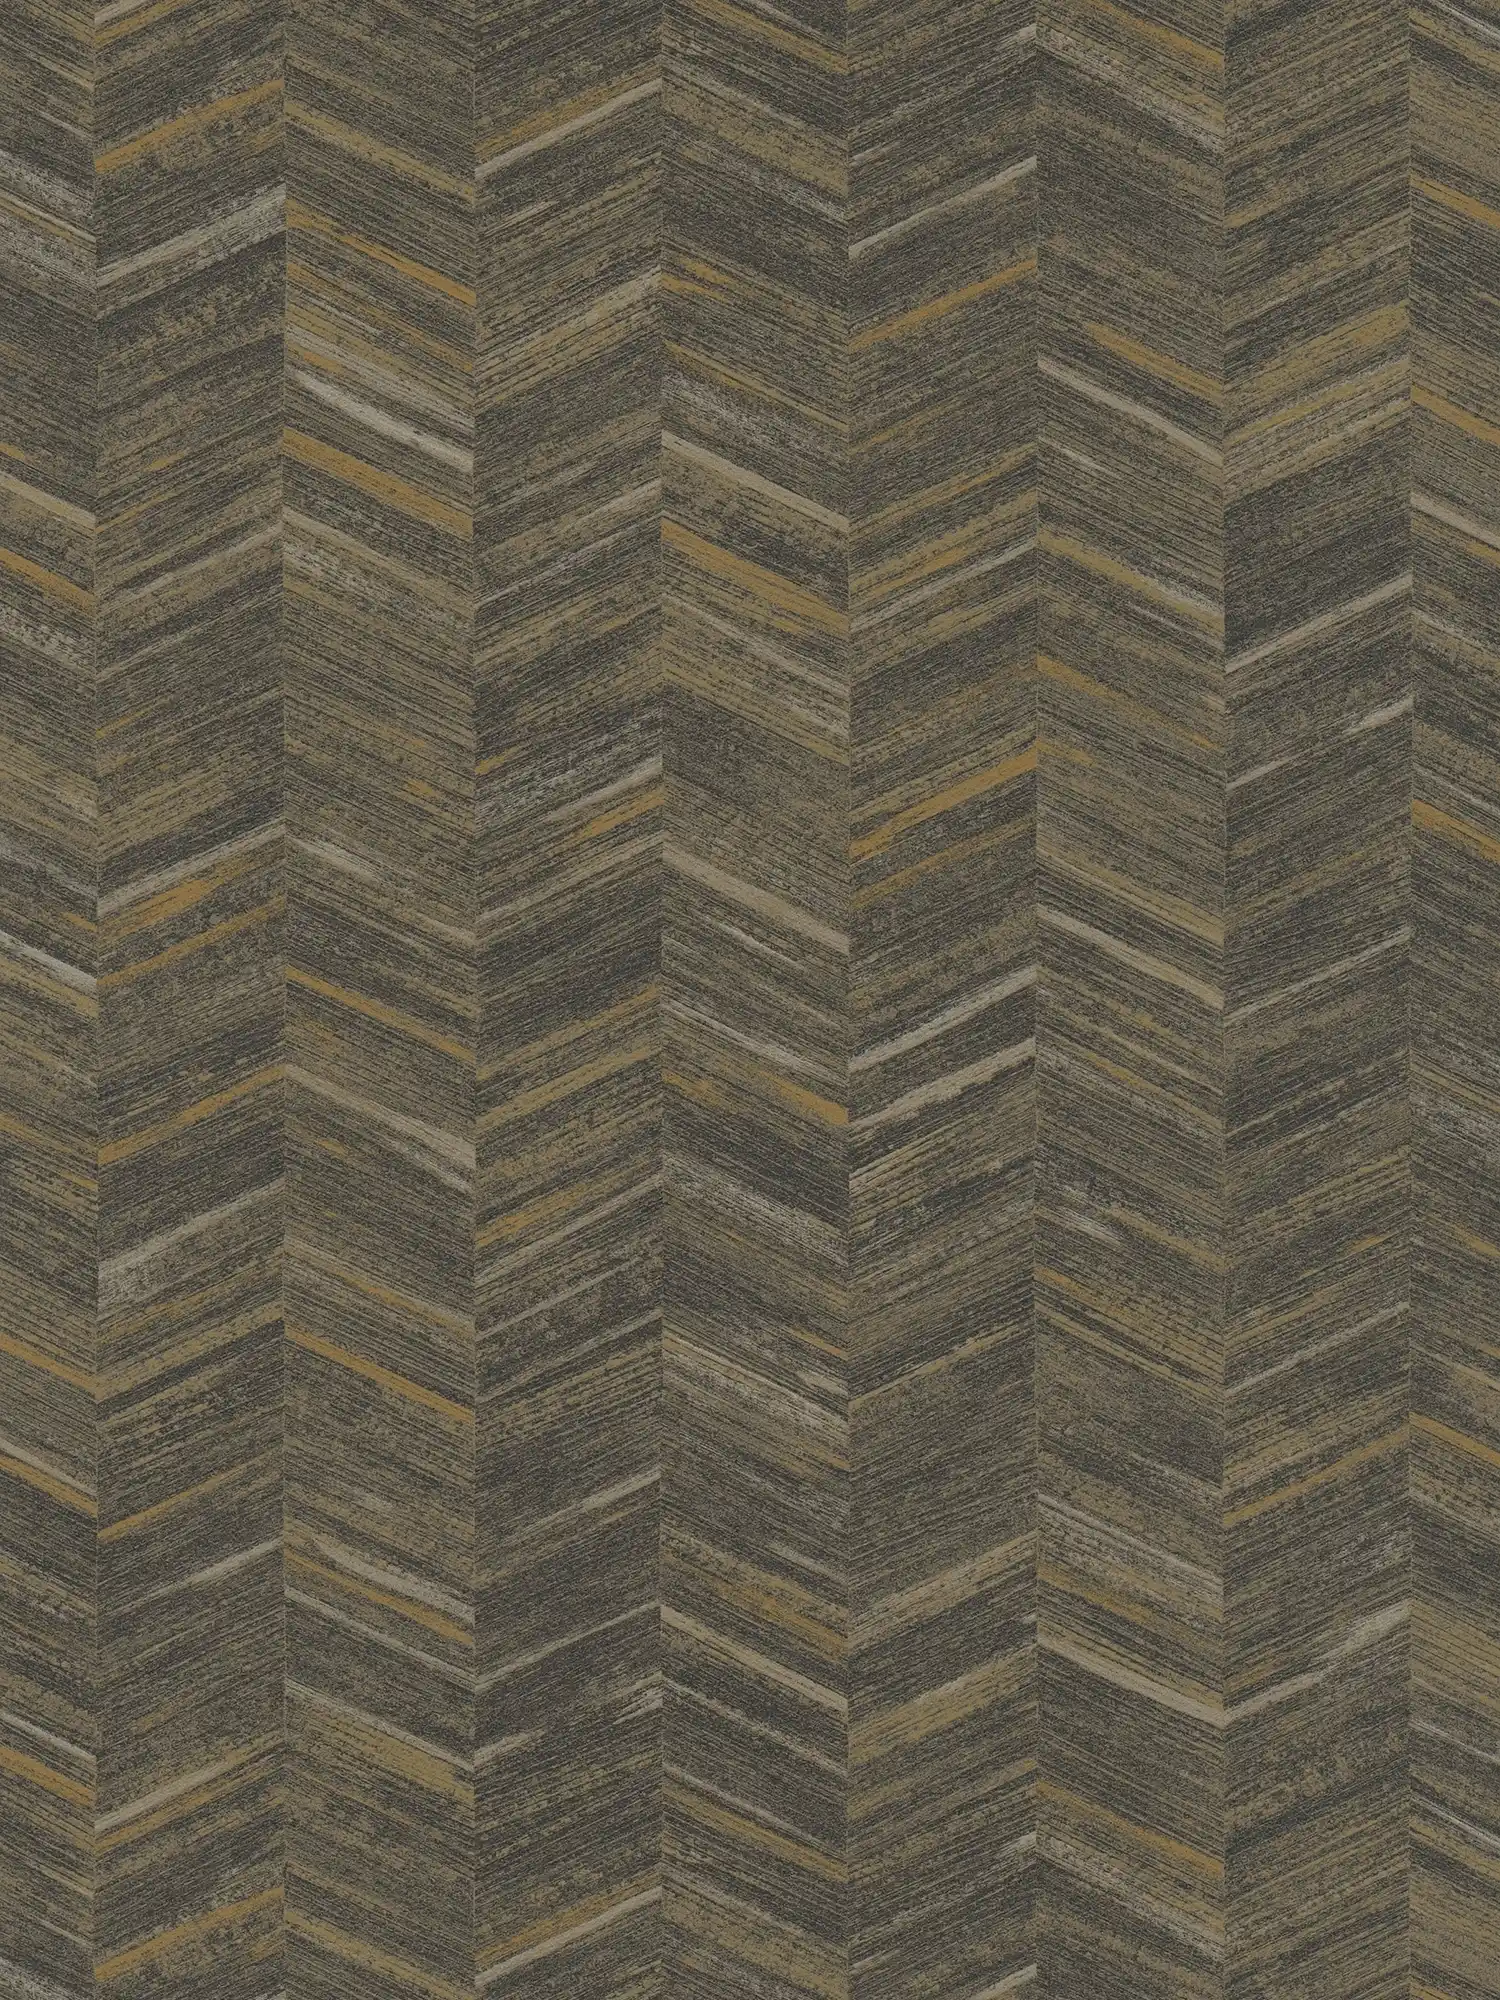 Textured wallpaper non-woven with wood effect & herringbone pattern - brown, metallic
